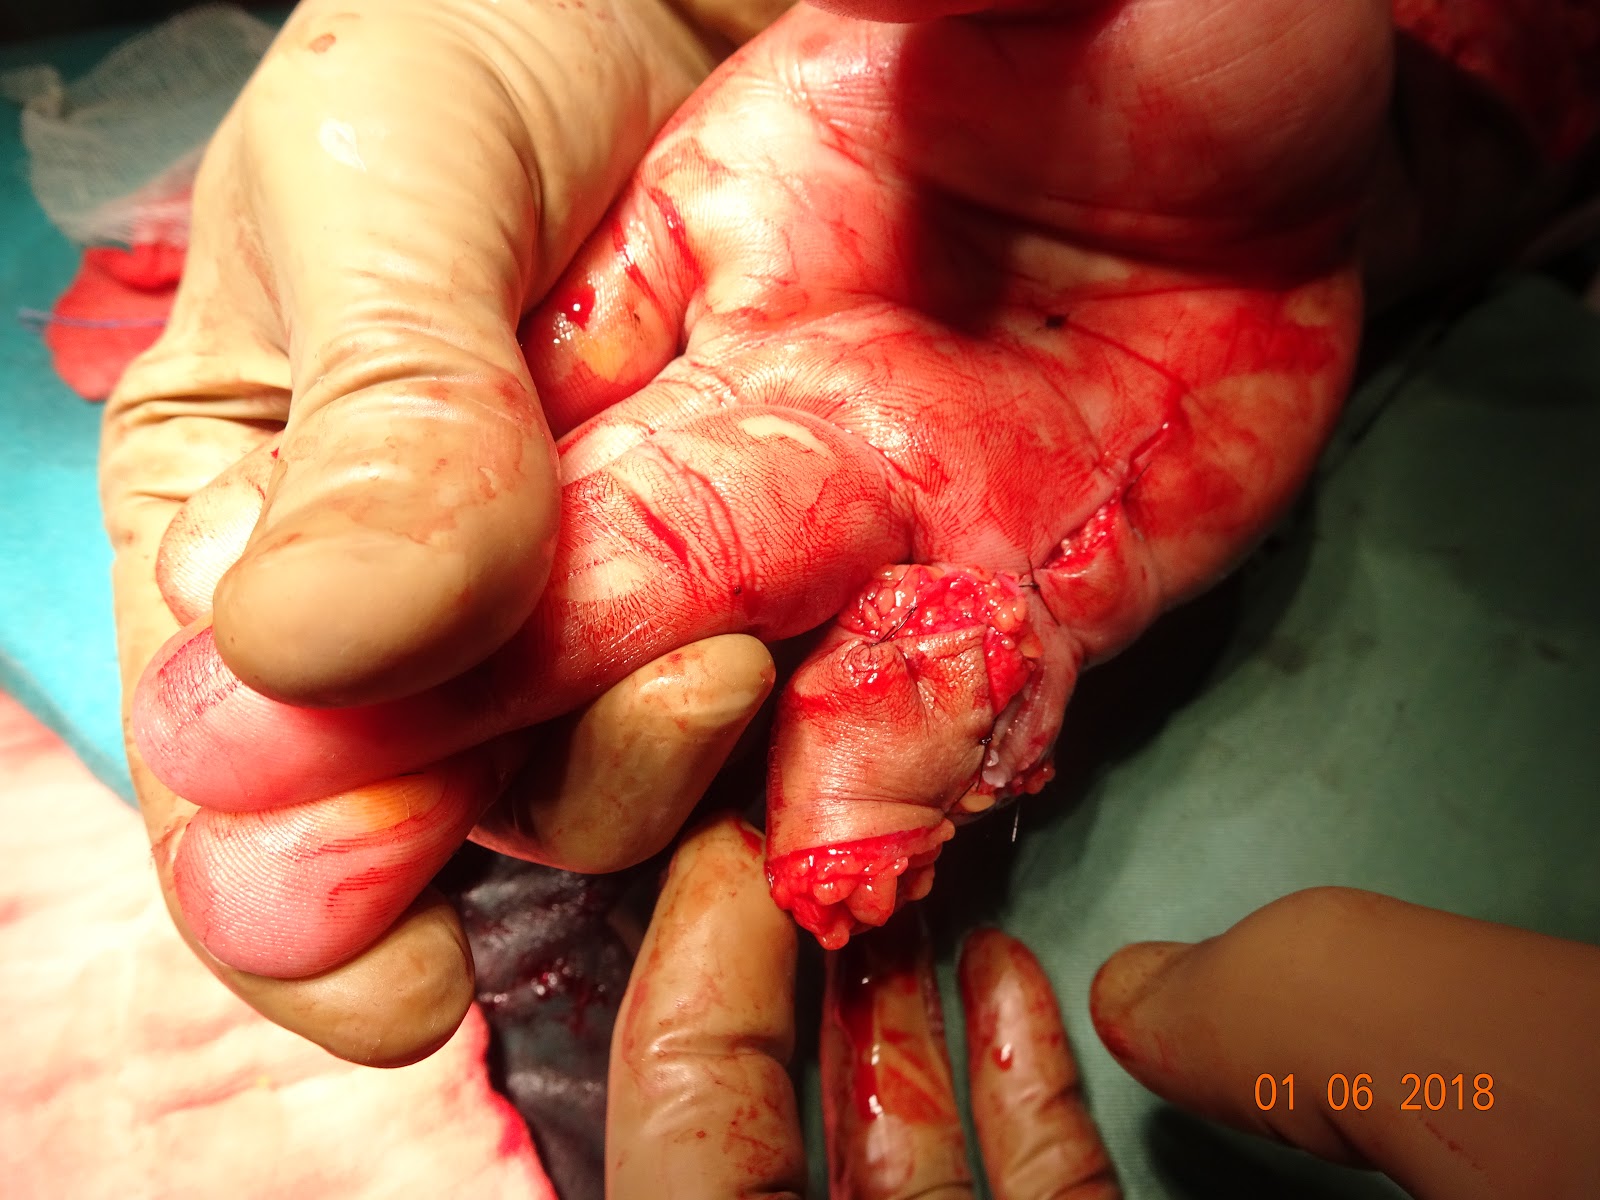 Arterilized venous flap fo finger degloving injury.